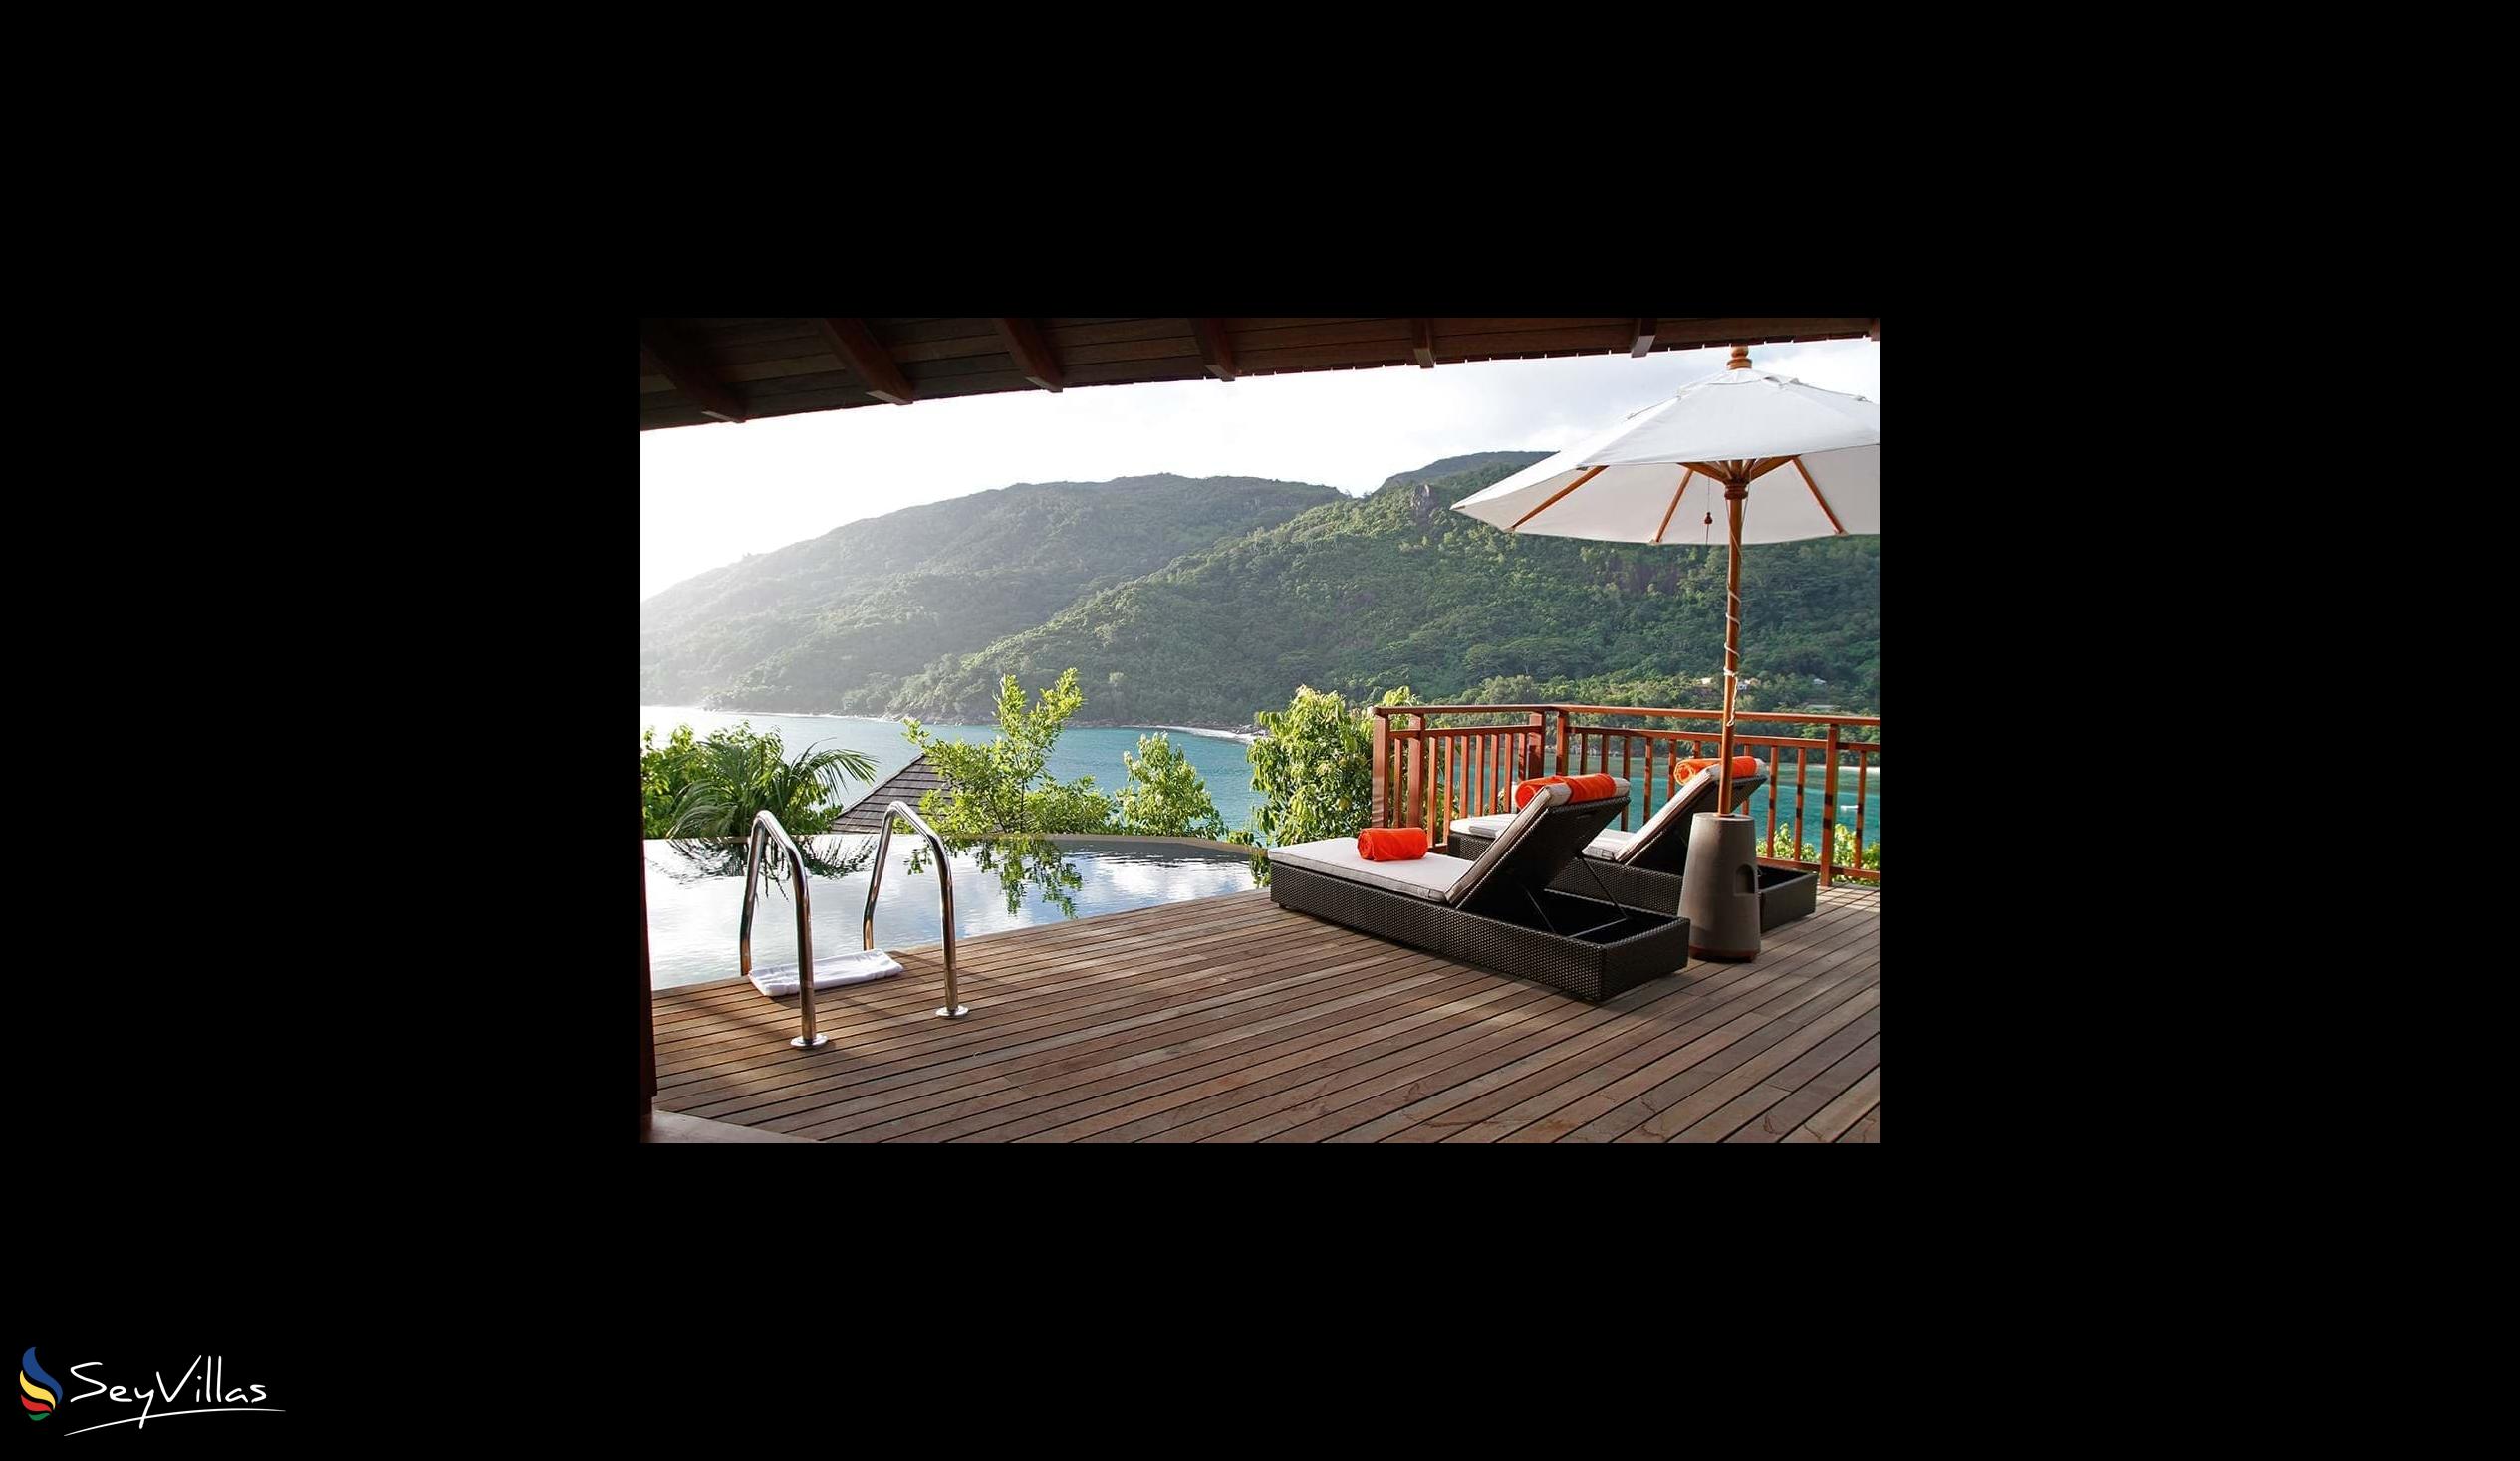 Photo 46: Constance Ephelia Seychelles - 2-Bedroom Hillside Villa - Mahé (Seychelles)